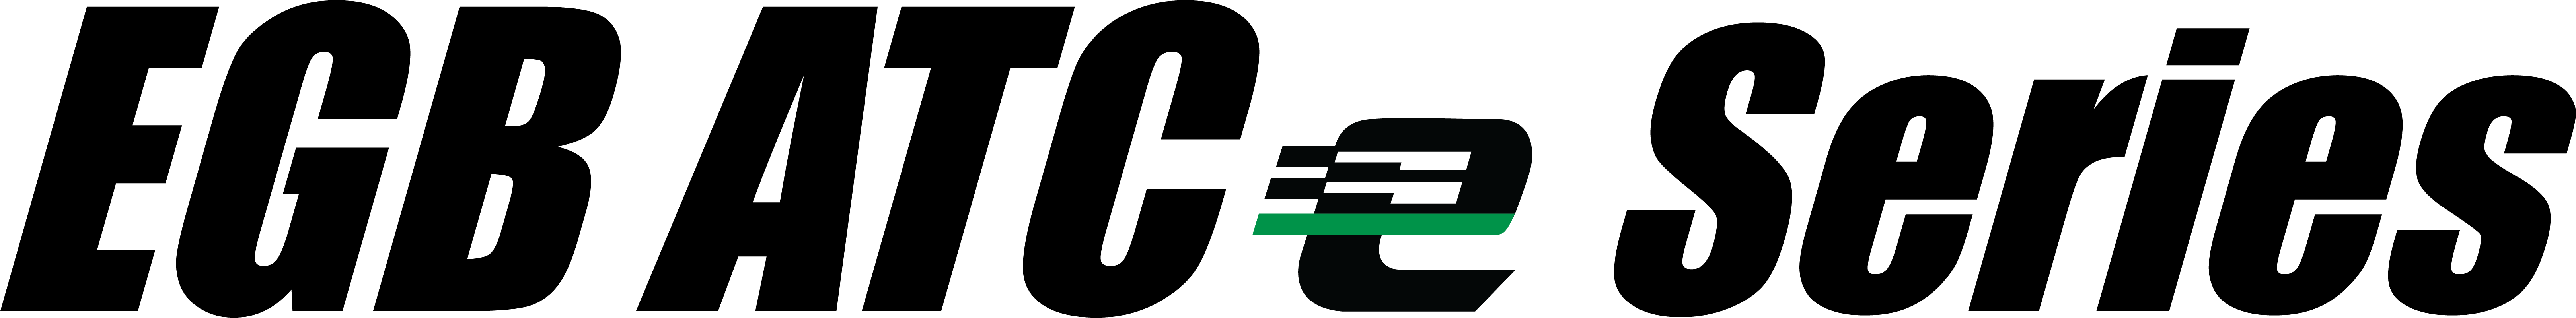 EGB ATCe Series logo